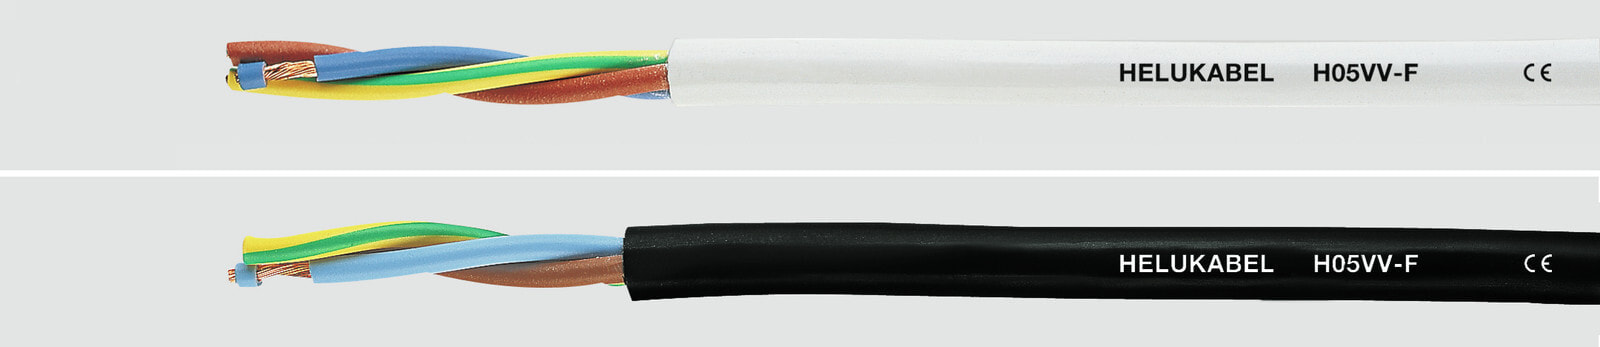 Helukabel 29480 - Low voltage cable - Black - Polyvinyl chloride (PVC) - Cooper - 2.5 mm² - 96 kg/km